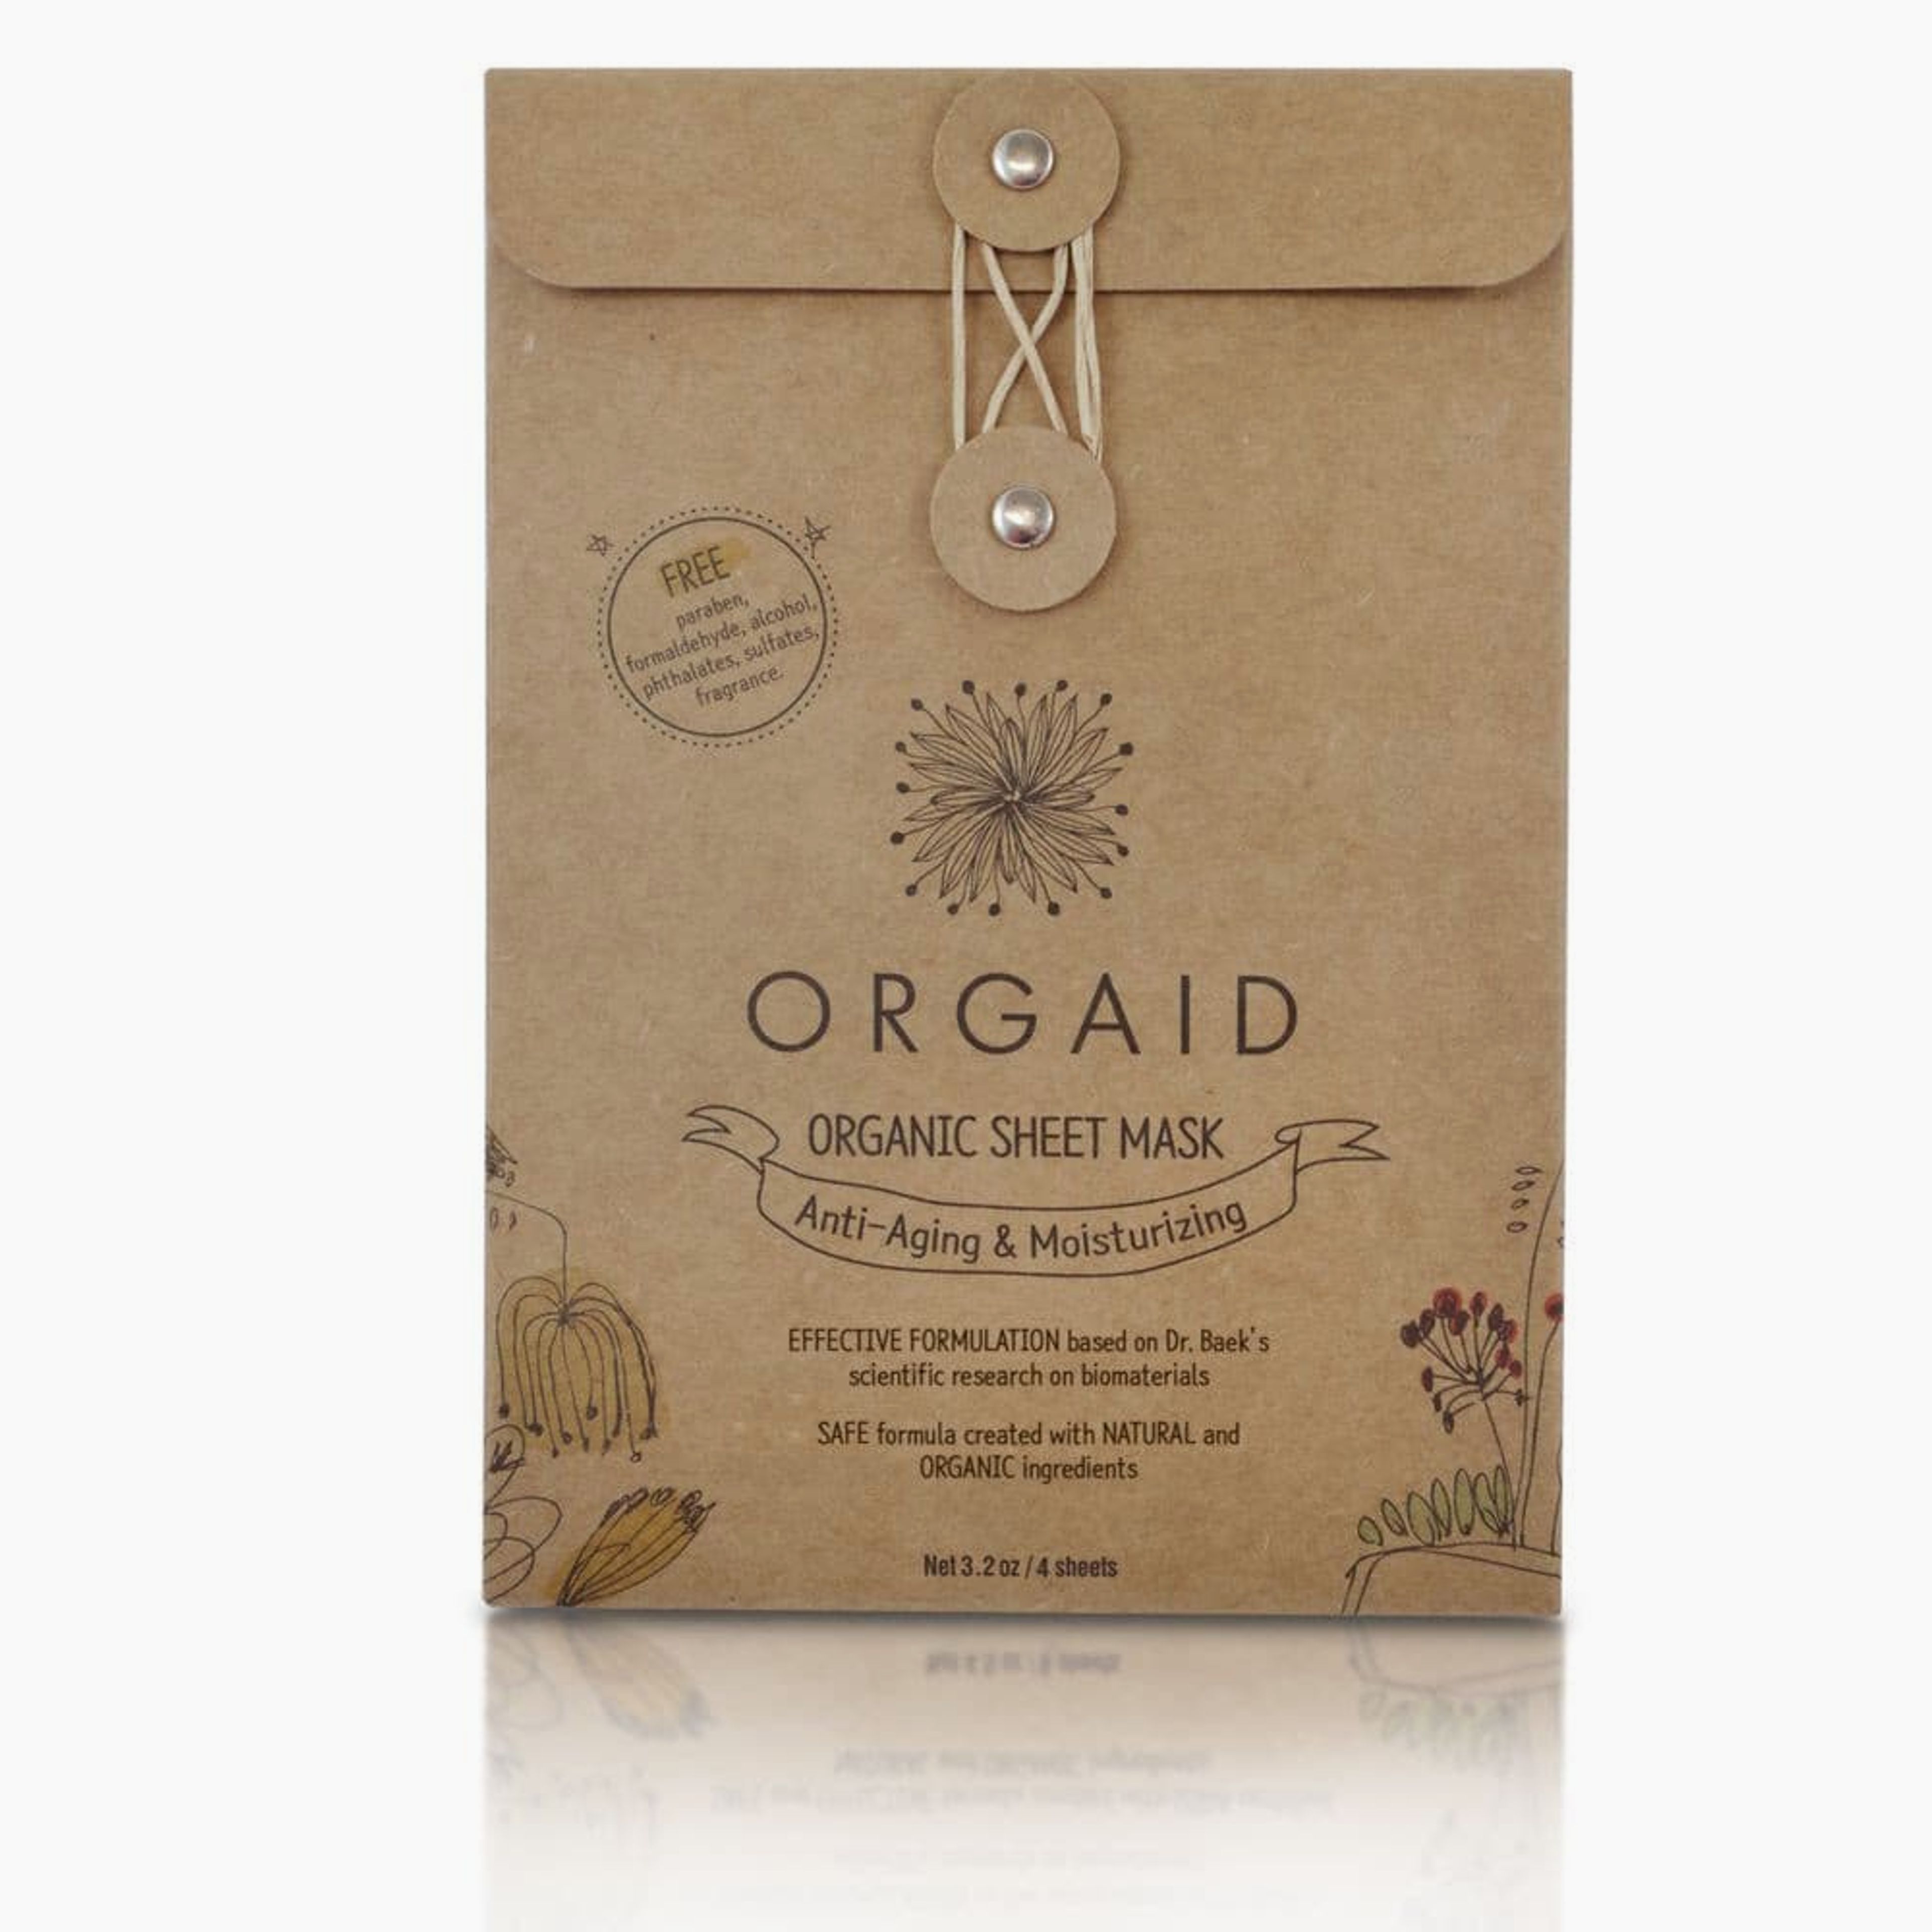 ORGAID Organic Sheet Mask